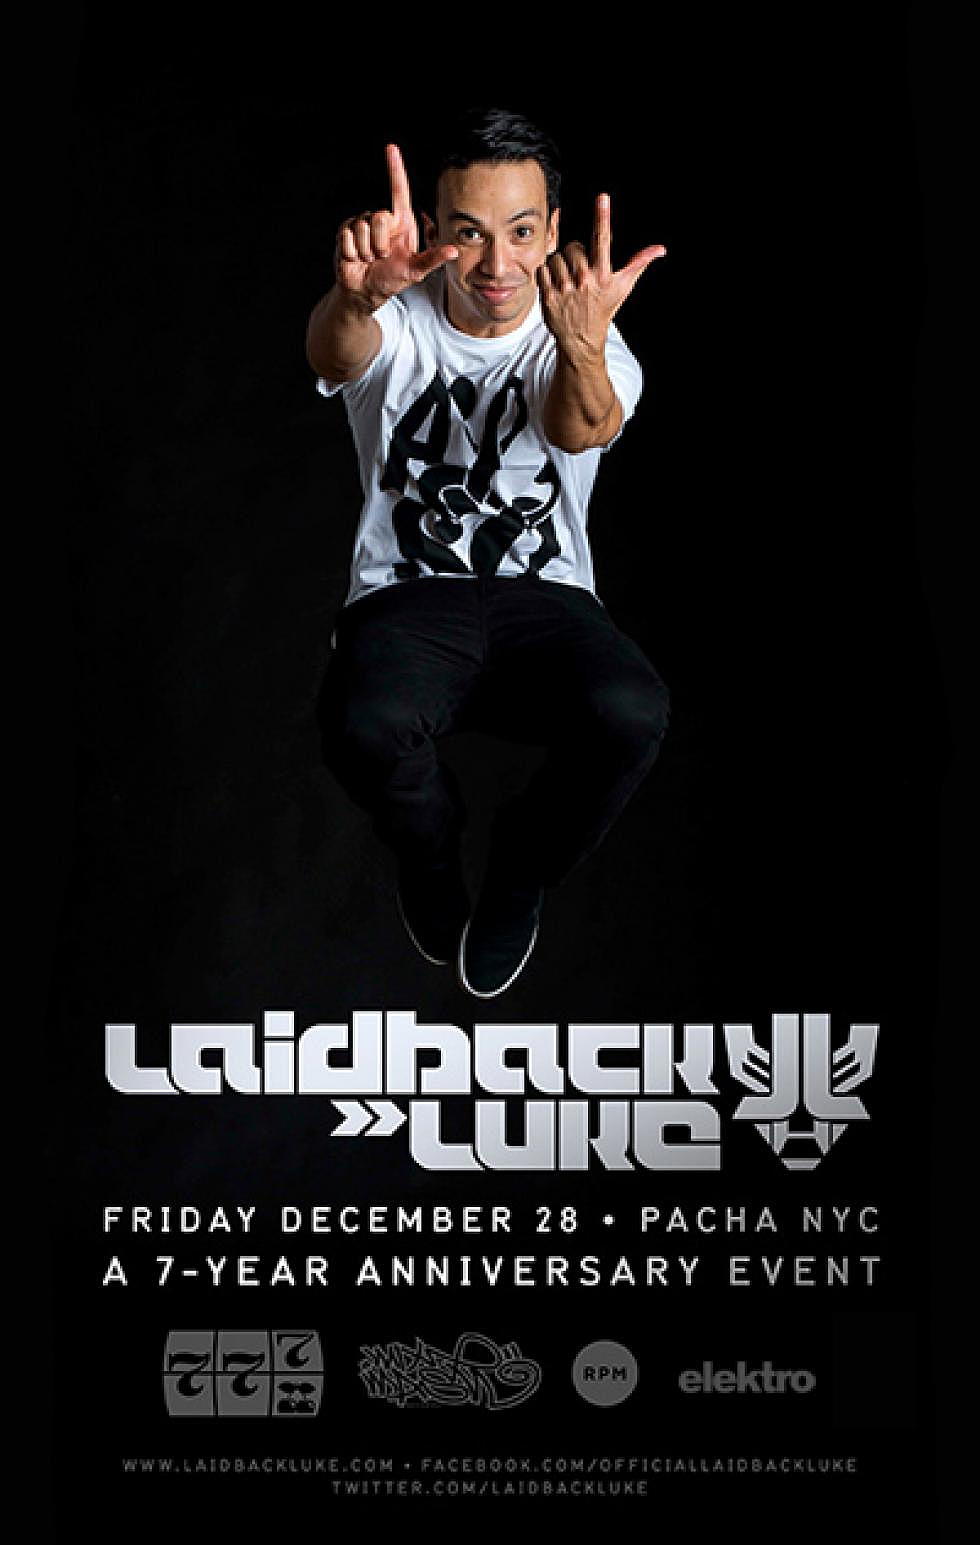 elektro x Pacha NYC 7 Year Anniversary Celebration Contest Part 5 w/ Laidback Luke Dec 28th